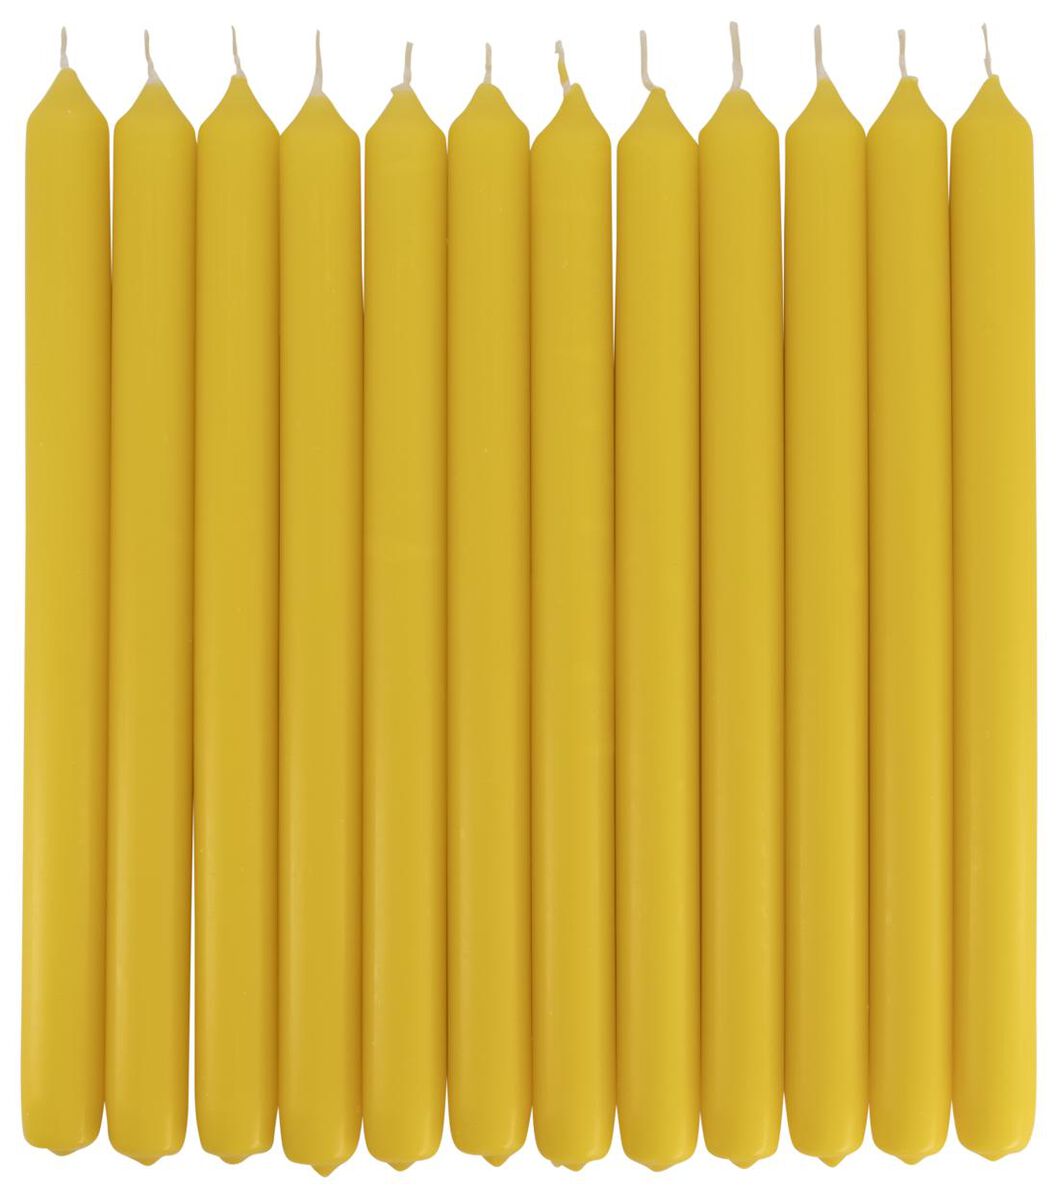 12 longues bougies d'intérieur Ø2.2x29 jaune - 13502791 - HEMA